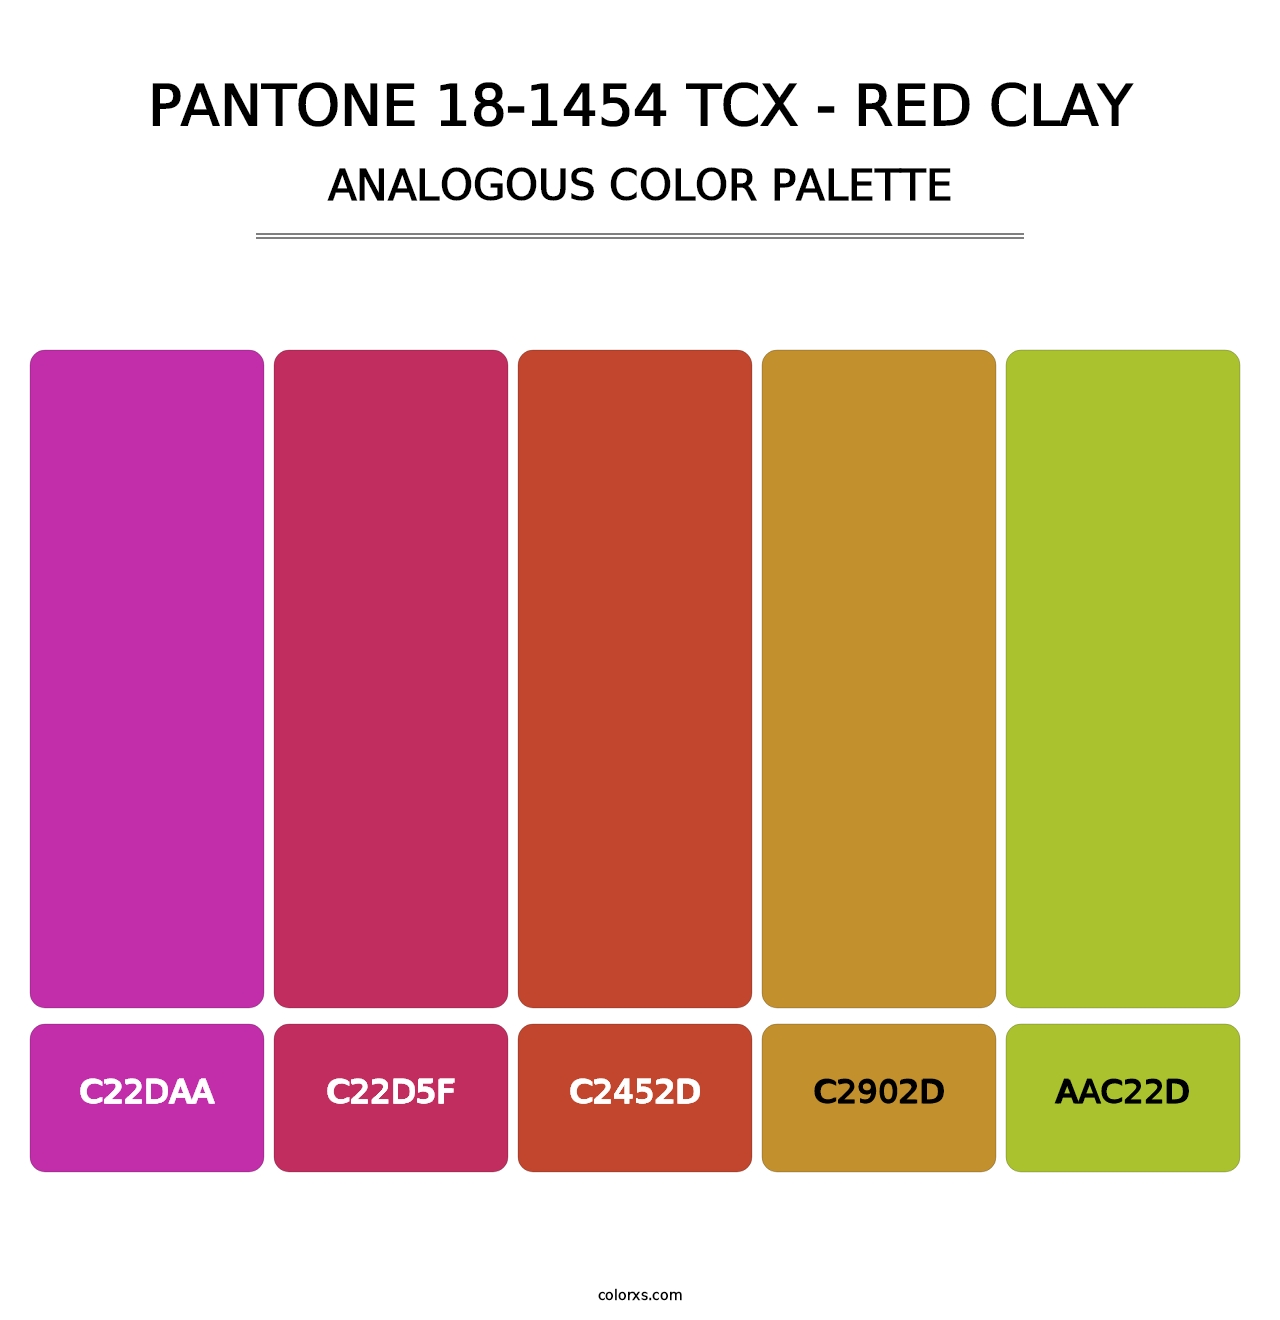 PANTONE 18-1454 TCX - Red Clay - Analogous Color Palette